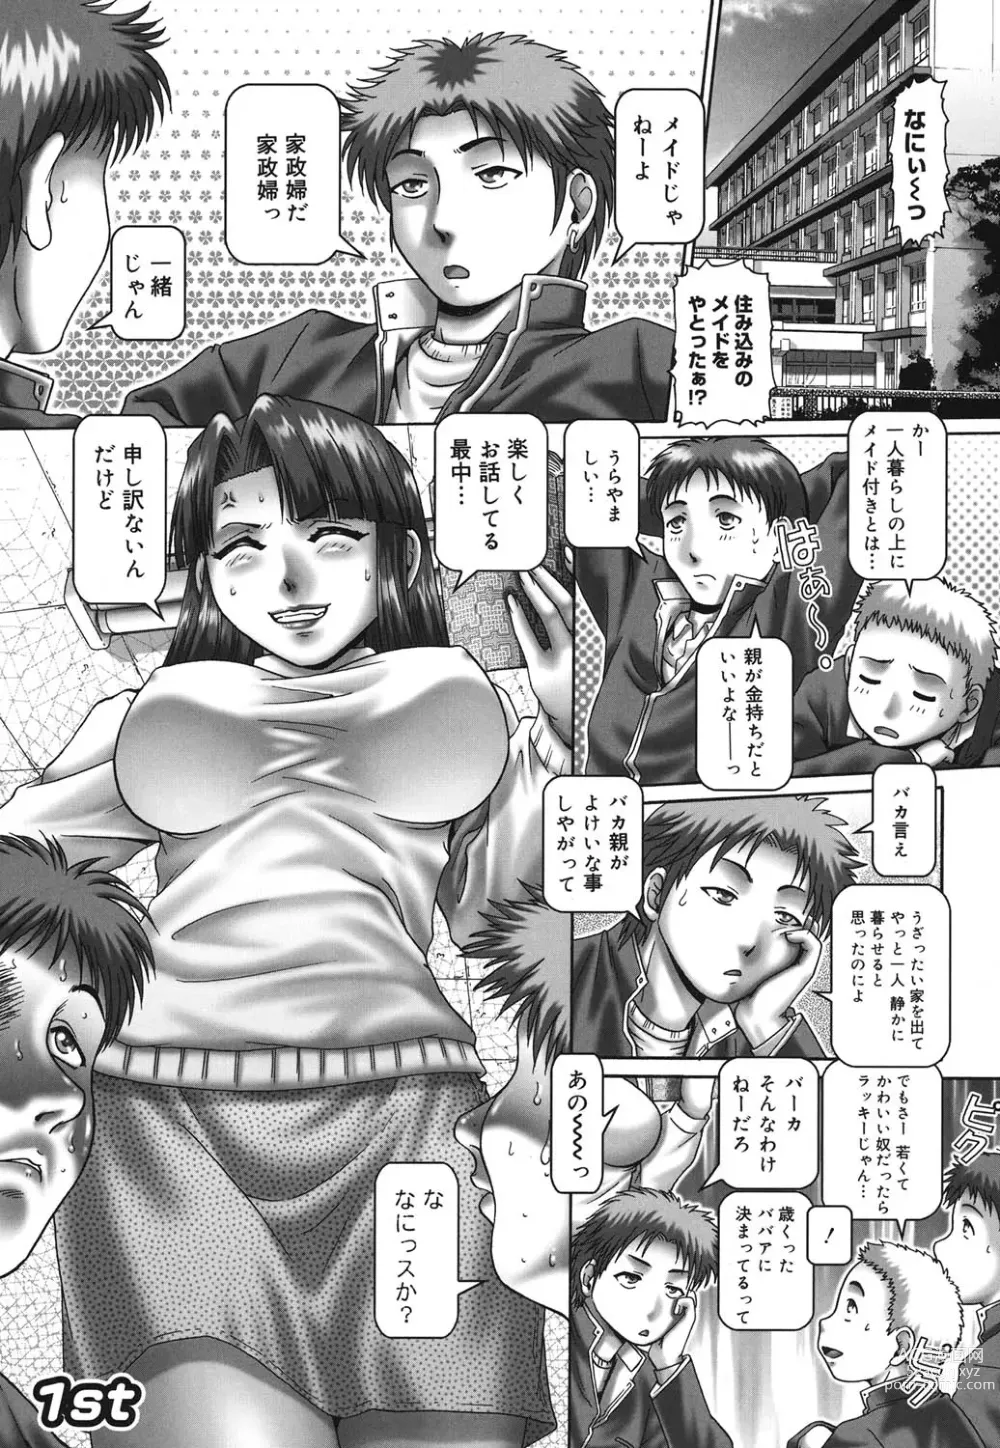 Page 10 of manga Maid in Teacher